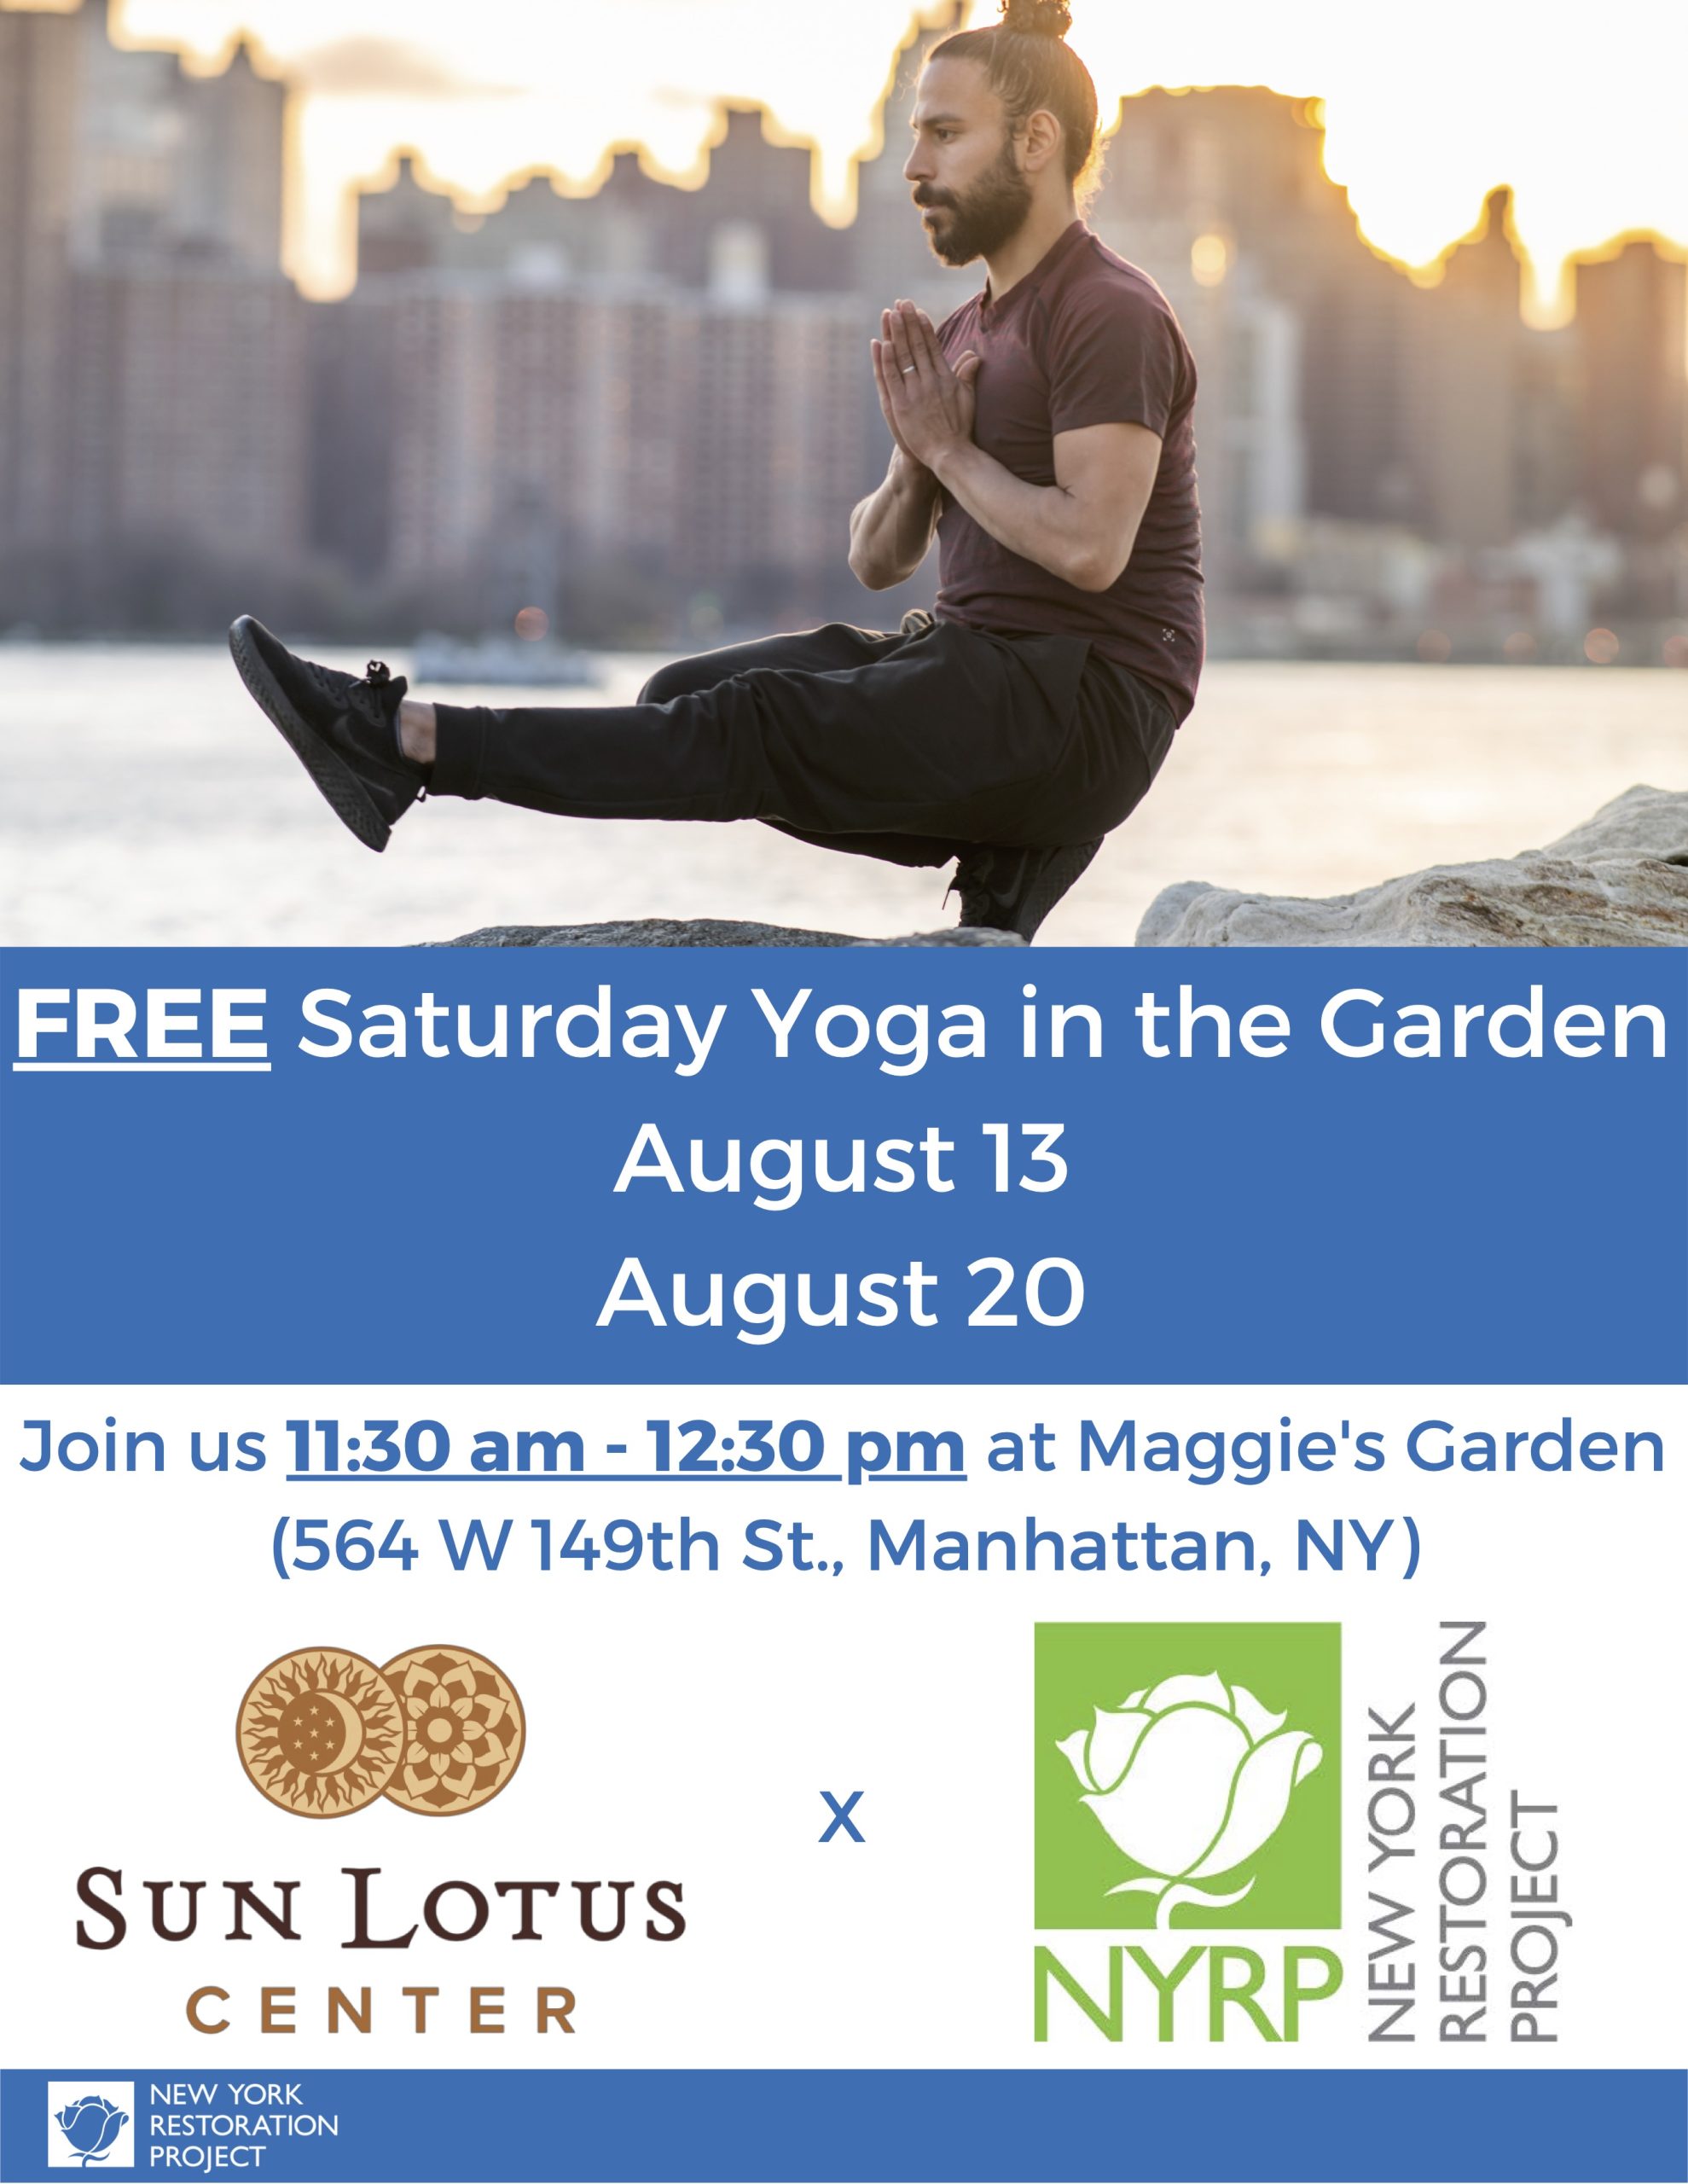 FREE YOGA CLASS: Yoga in the Garden